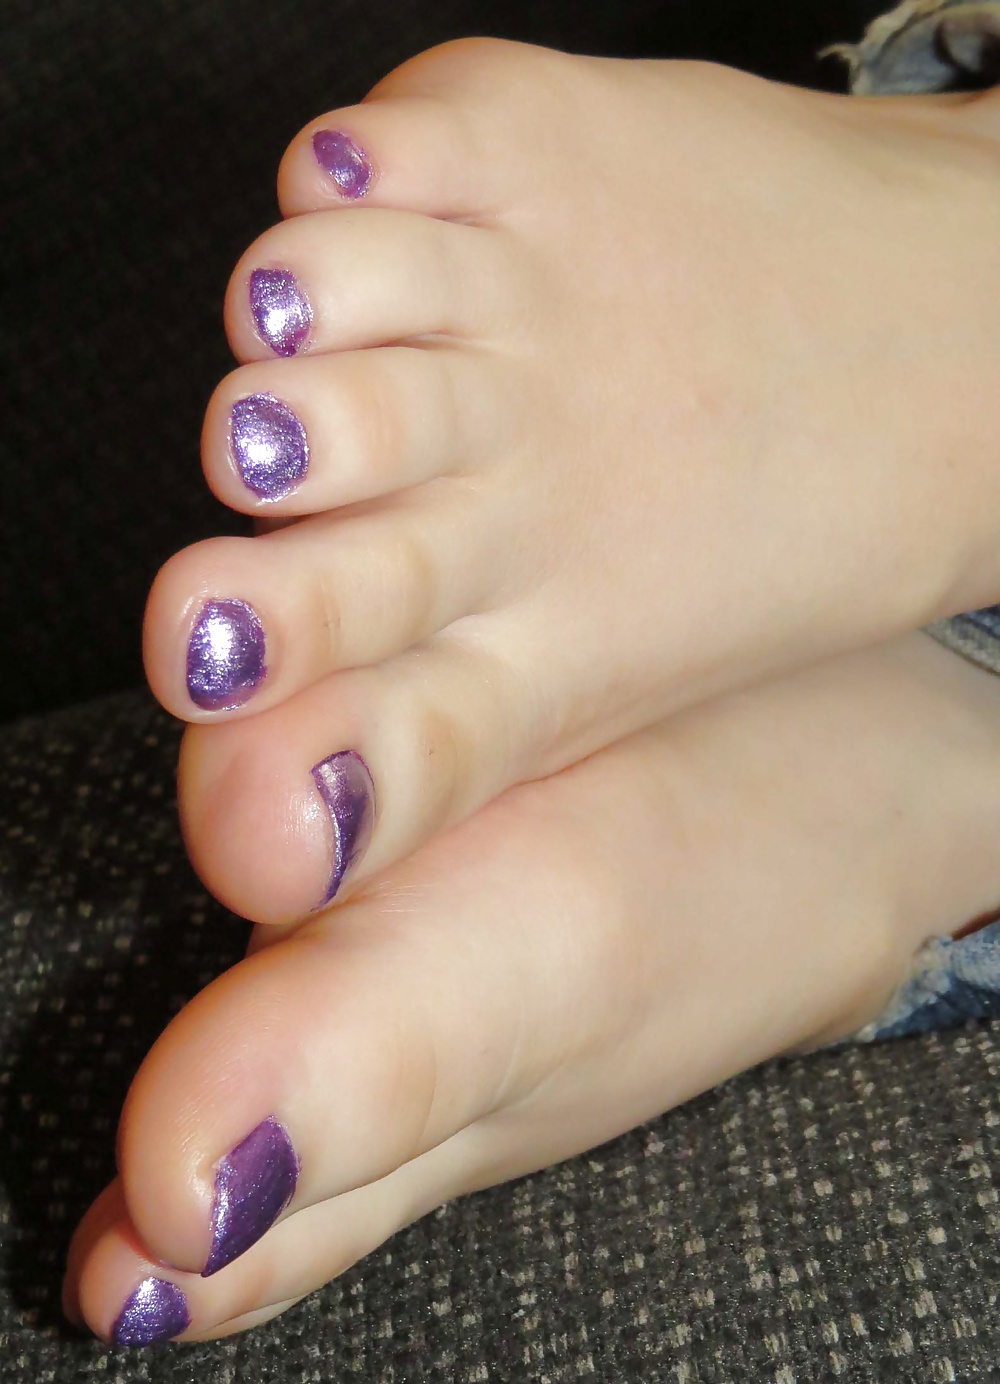 Barefeet and purple nails #28949468